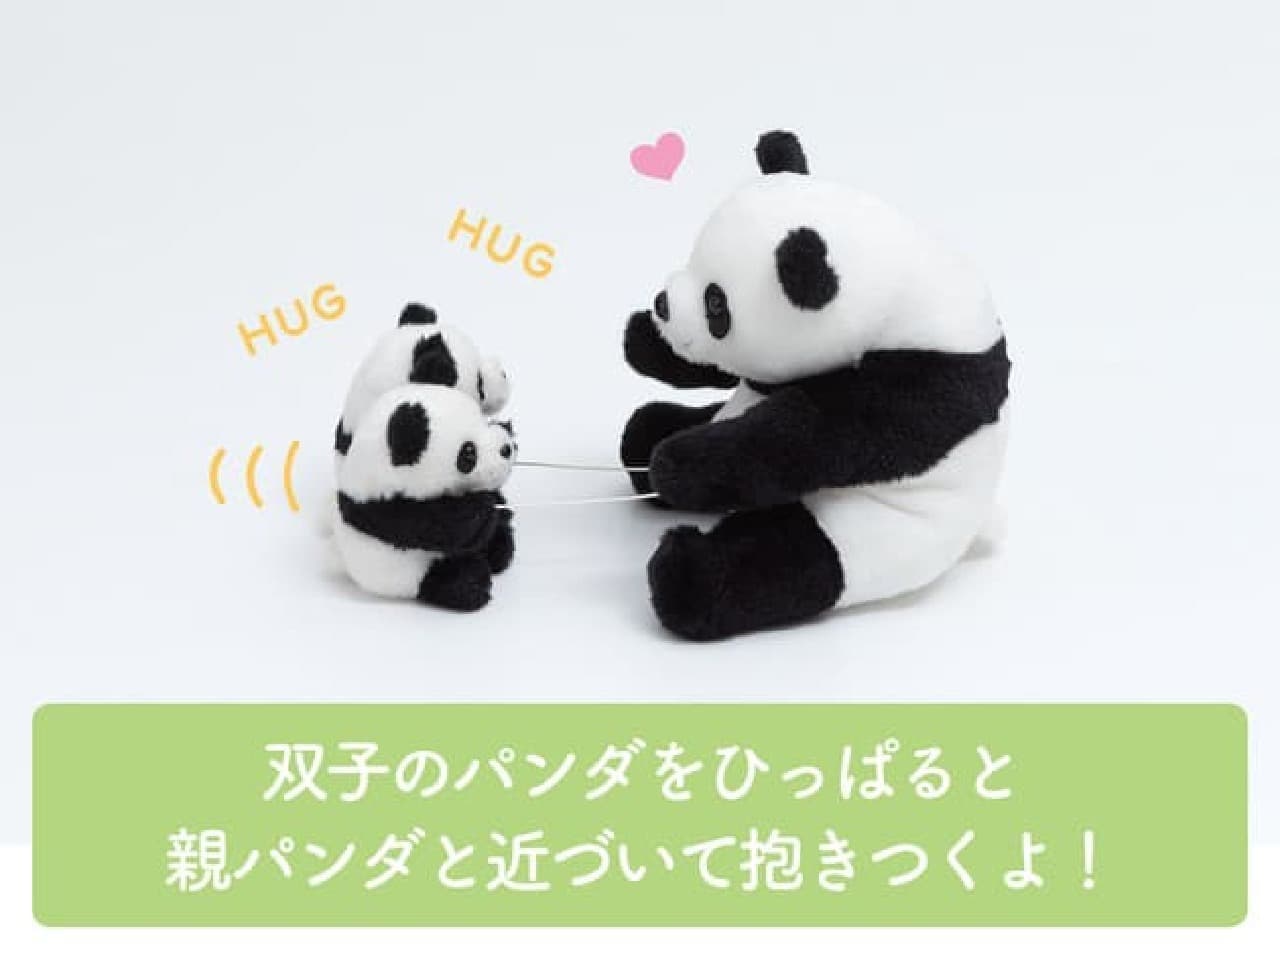 New Twin Baby Panda Goods at Ueno Information Center --Eco Bags, Plush Toys, Memorial Chocolates